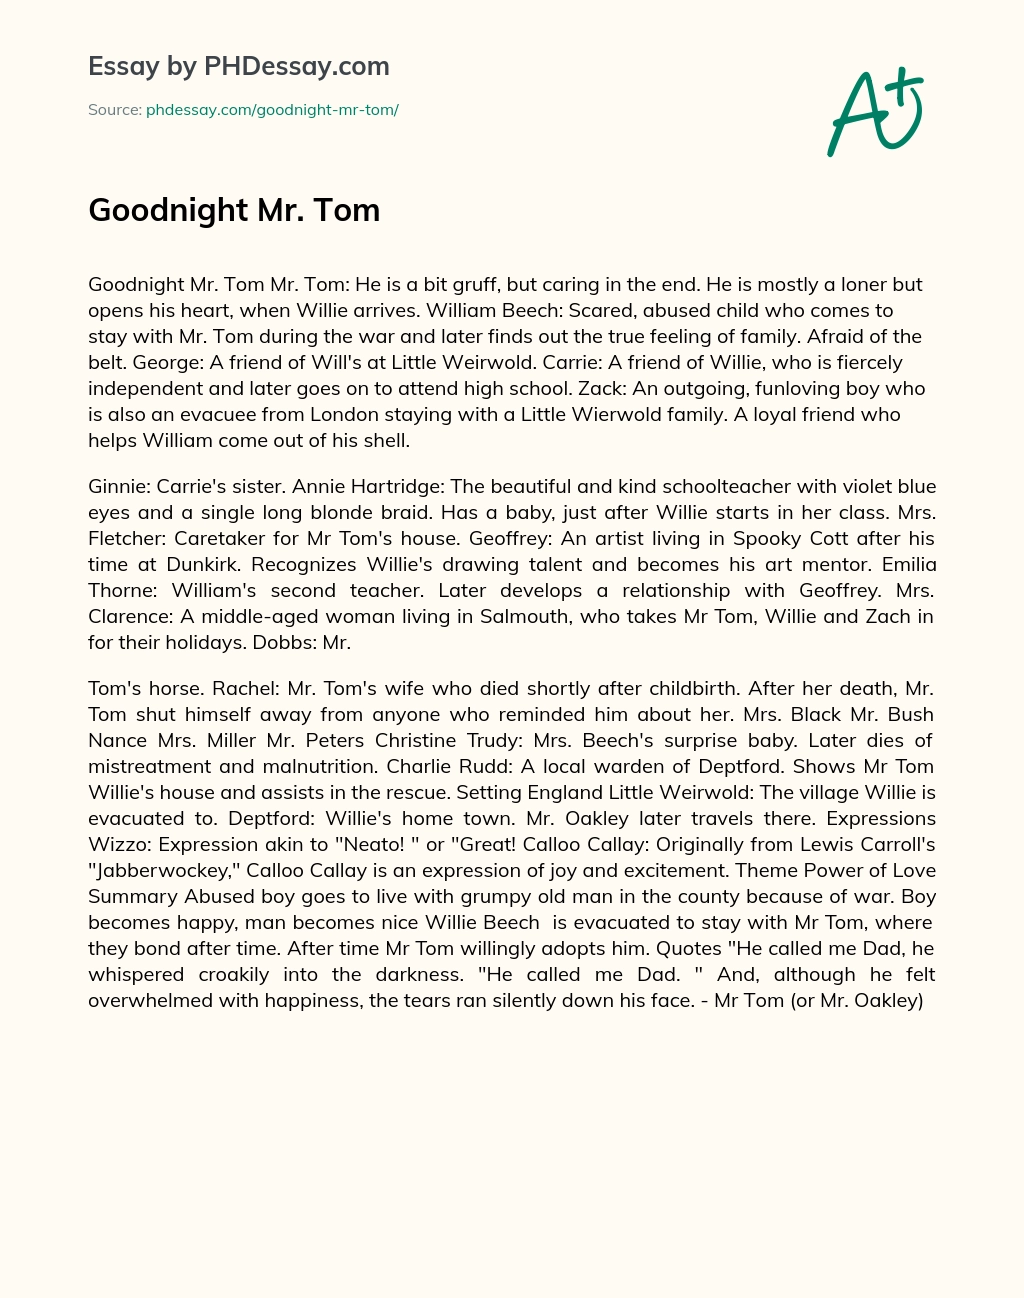 Goodnight Mr. Tom essay